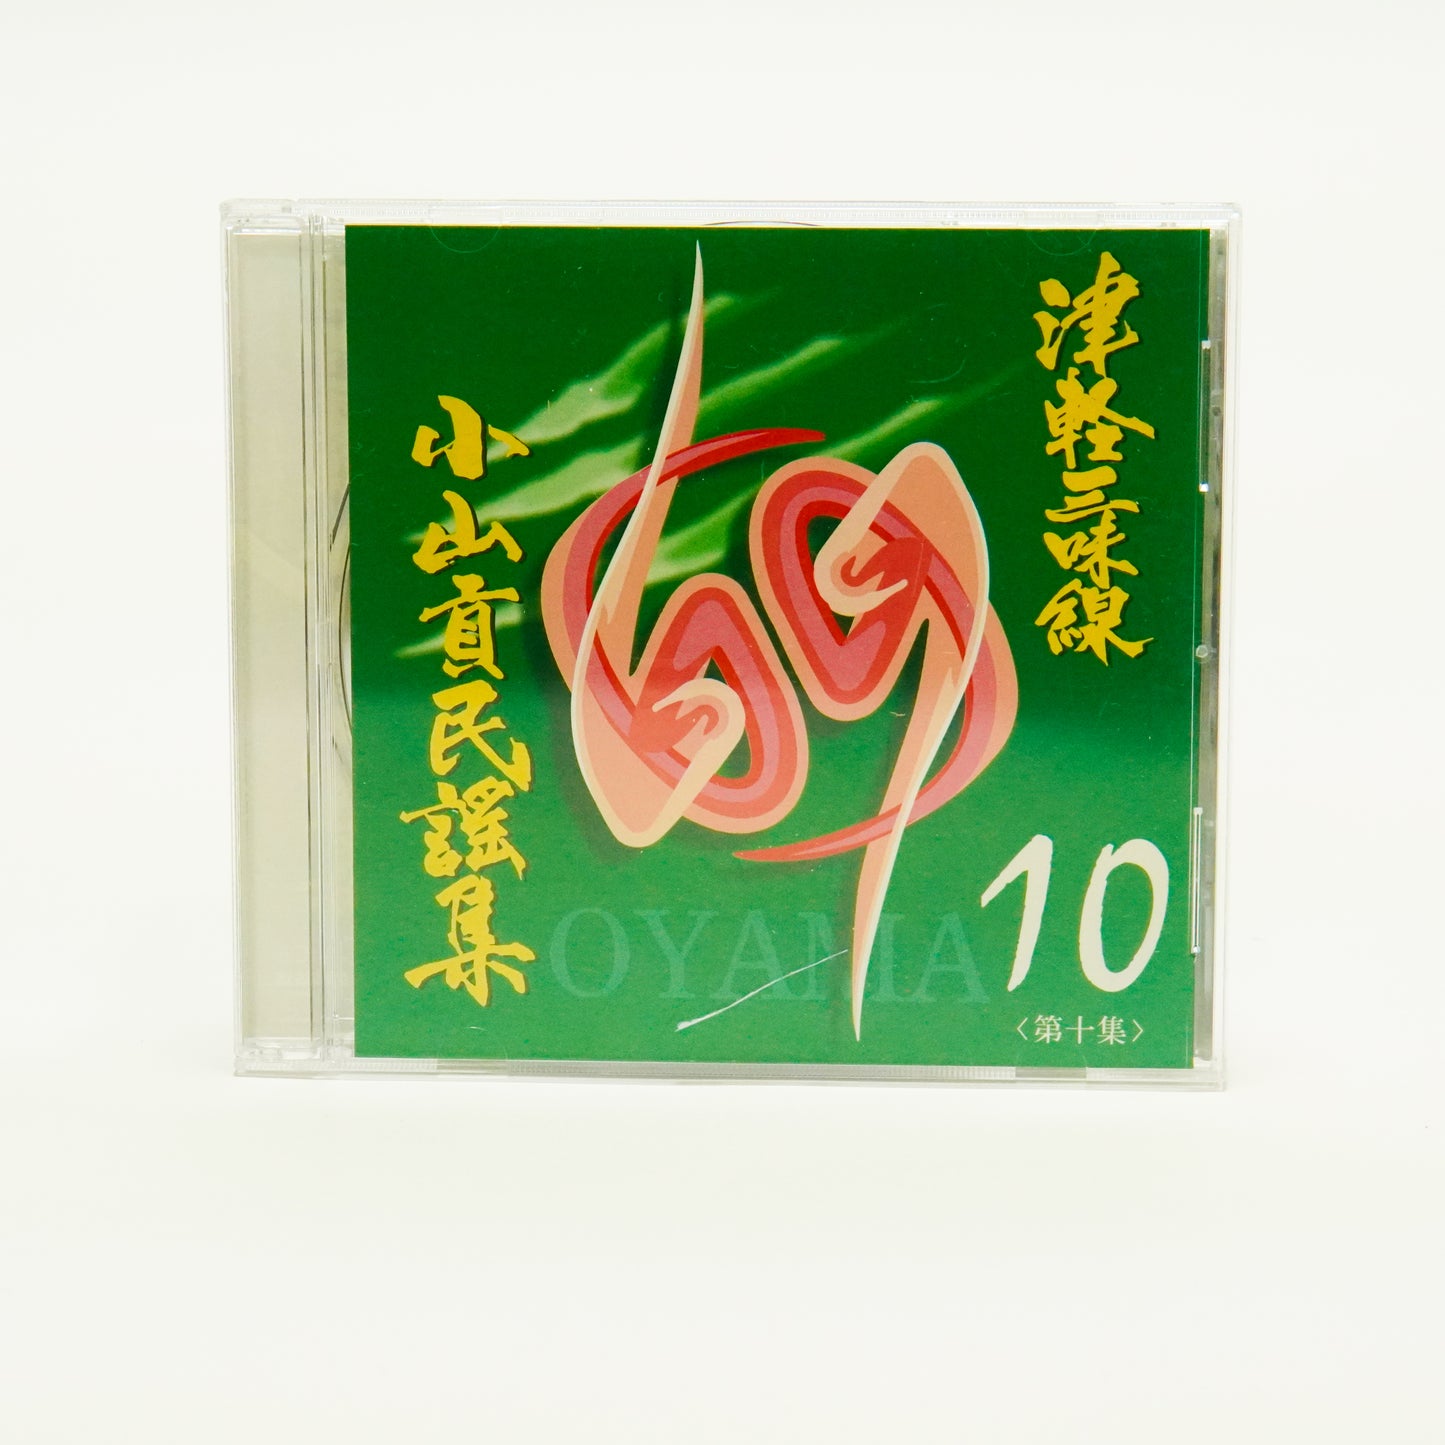 Oyama Ryu Minyo CD